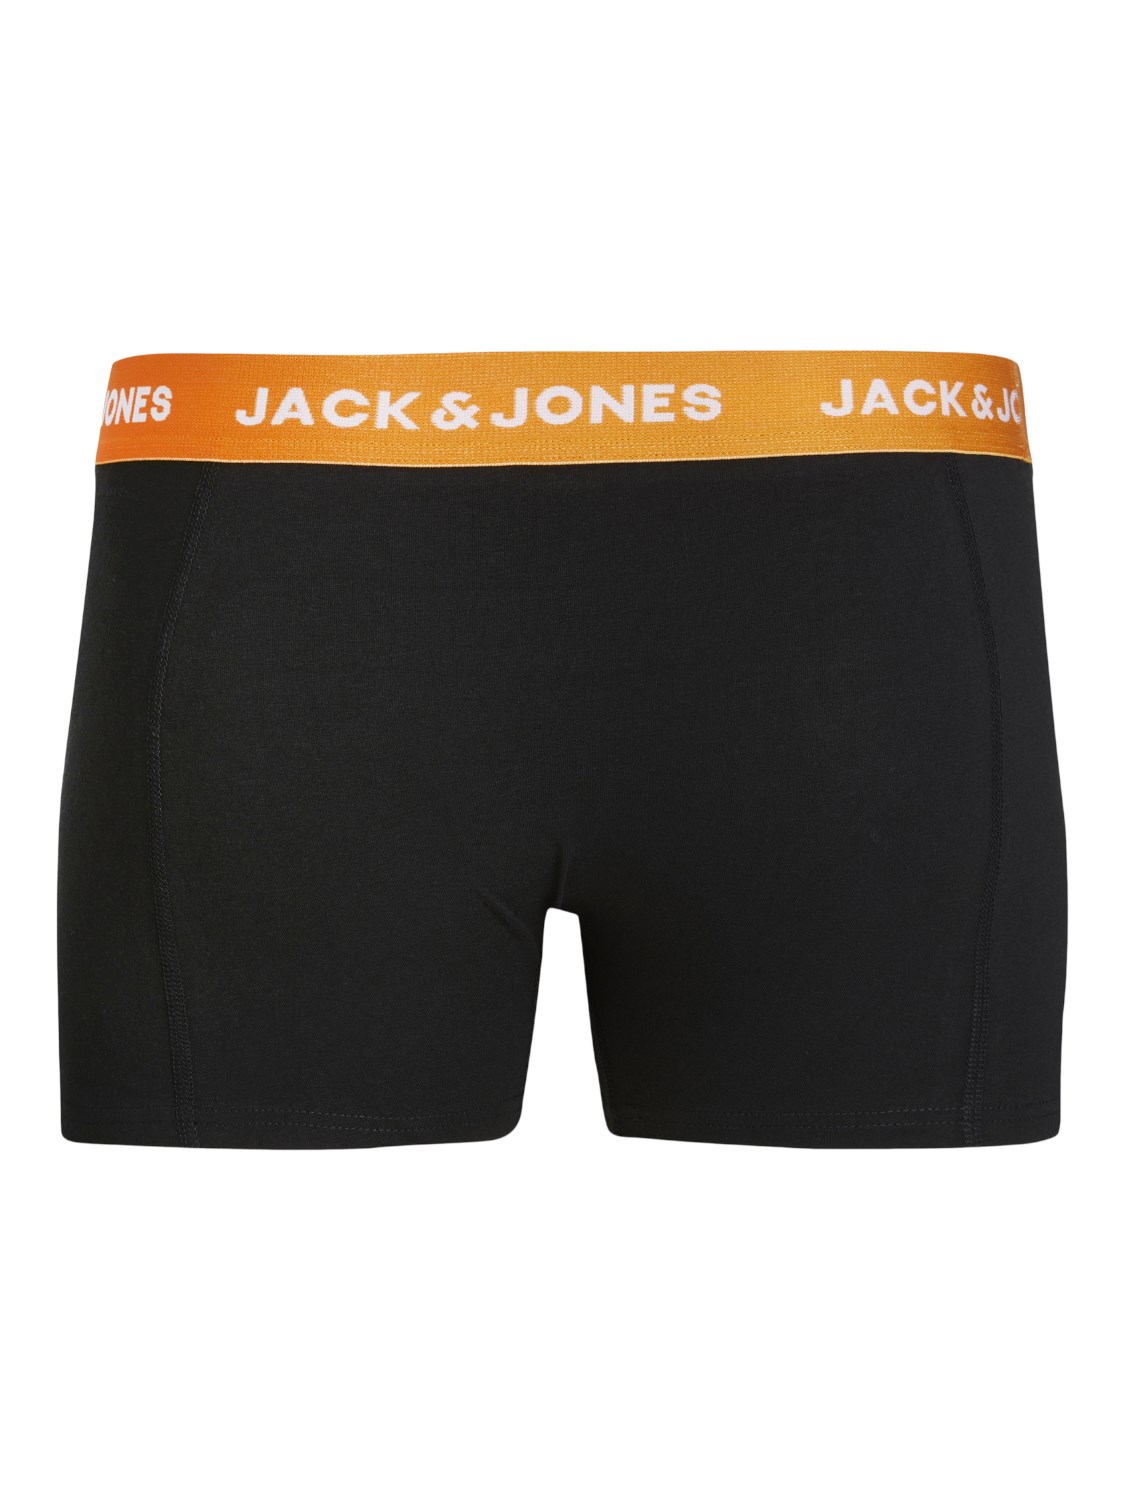 JACK&JONES - JACGAB TRUNKS 3 PACK - 12250204